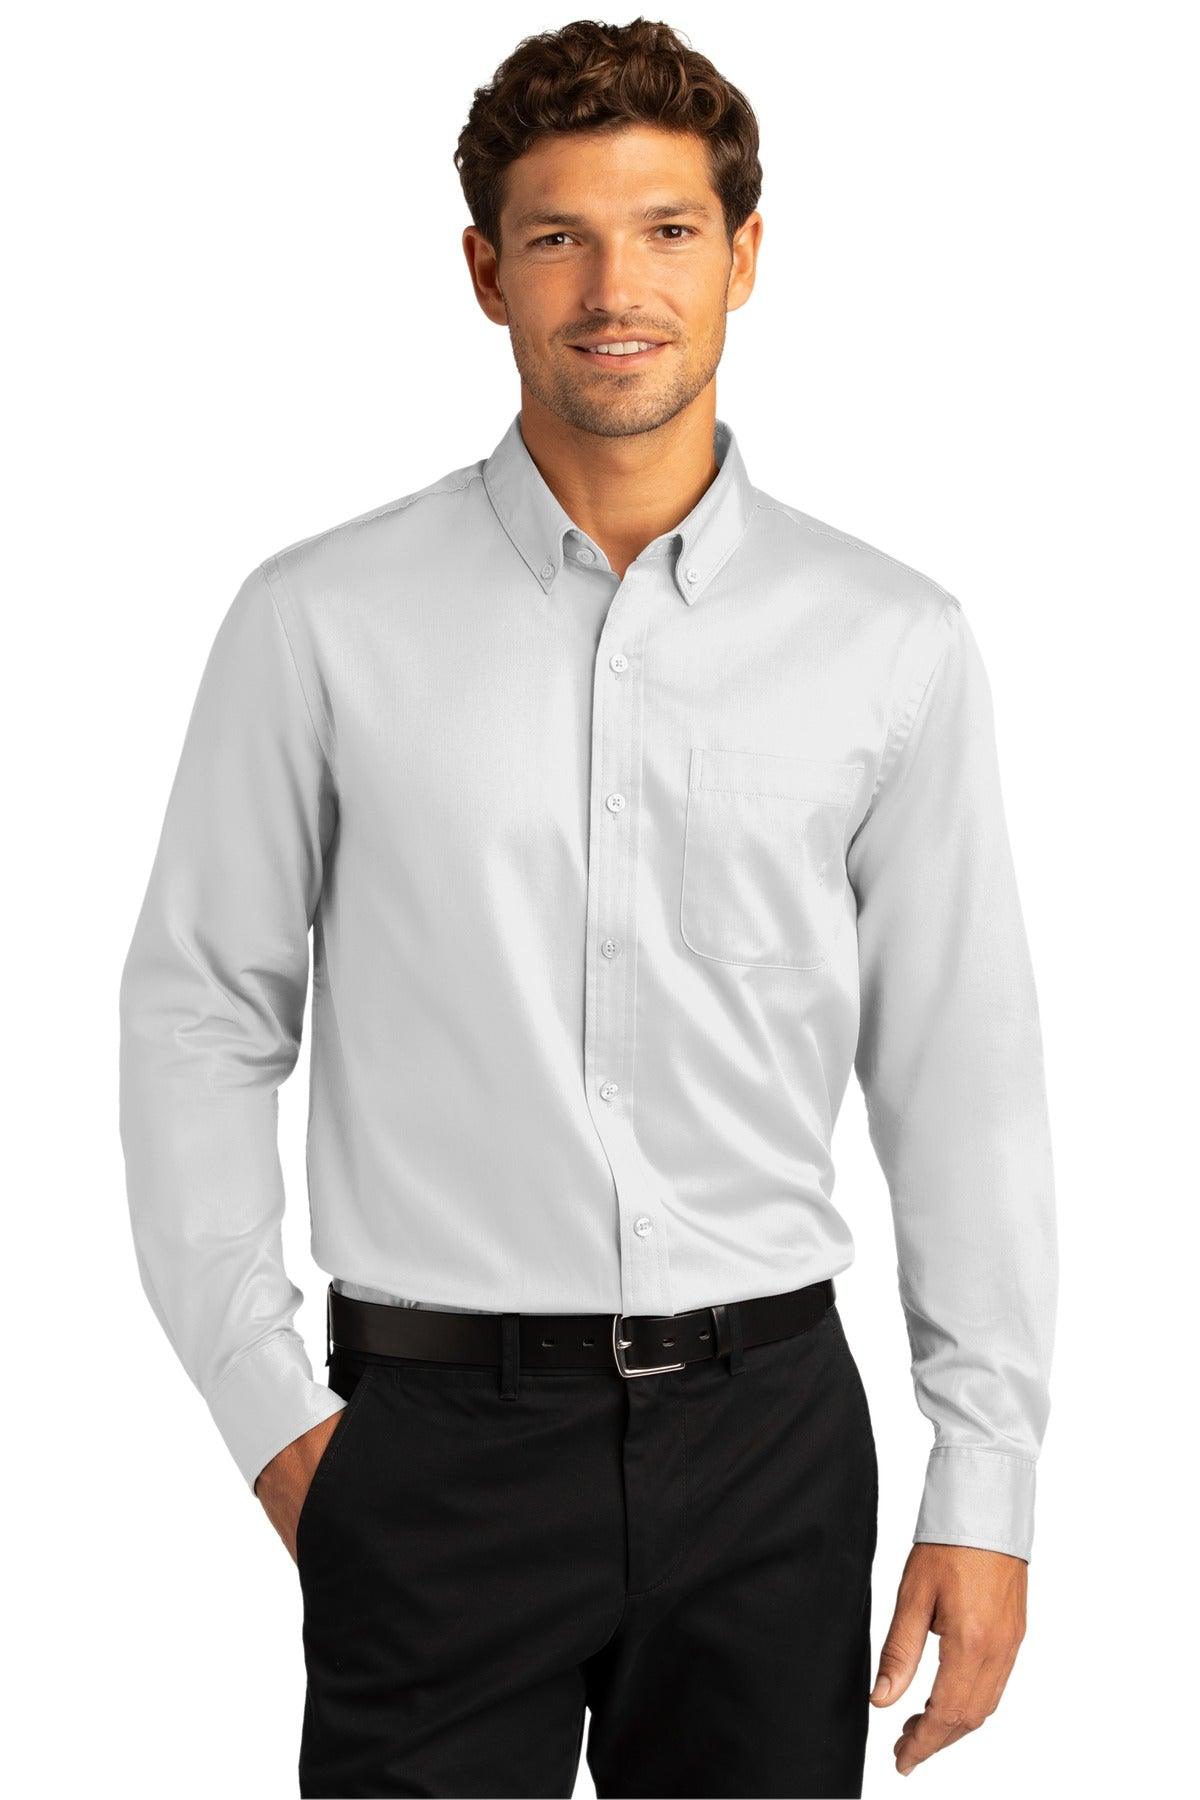 Port Authority Long Sleeve SuperPro React Twill Shirt. W808 - Dresses Max